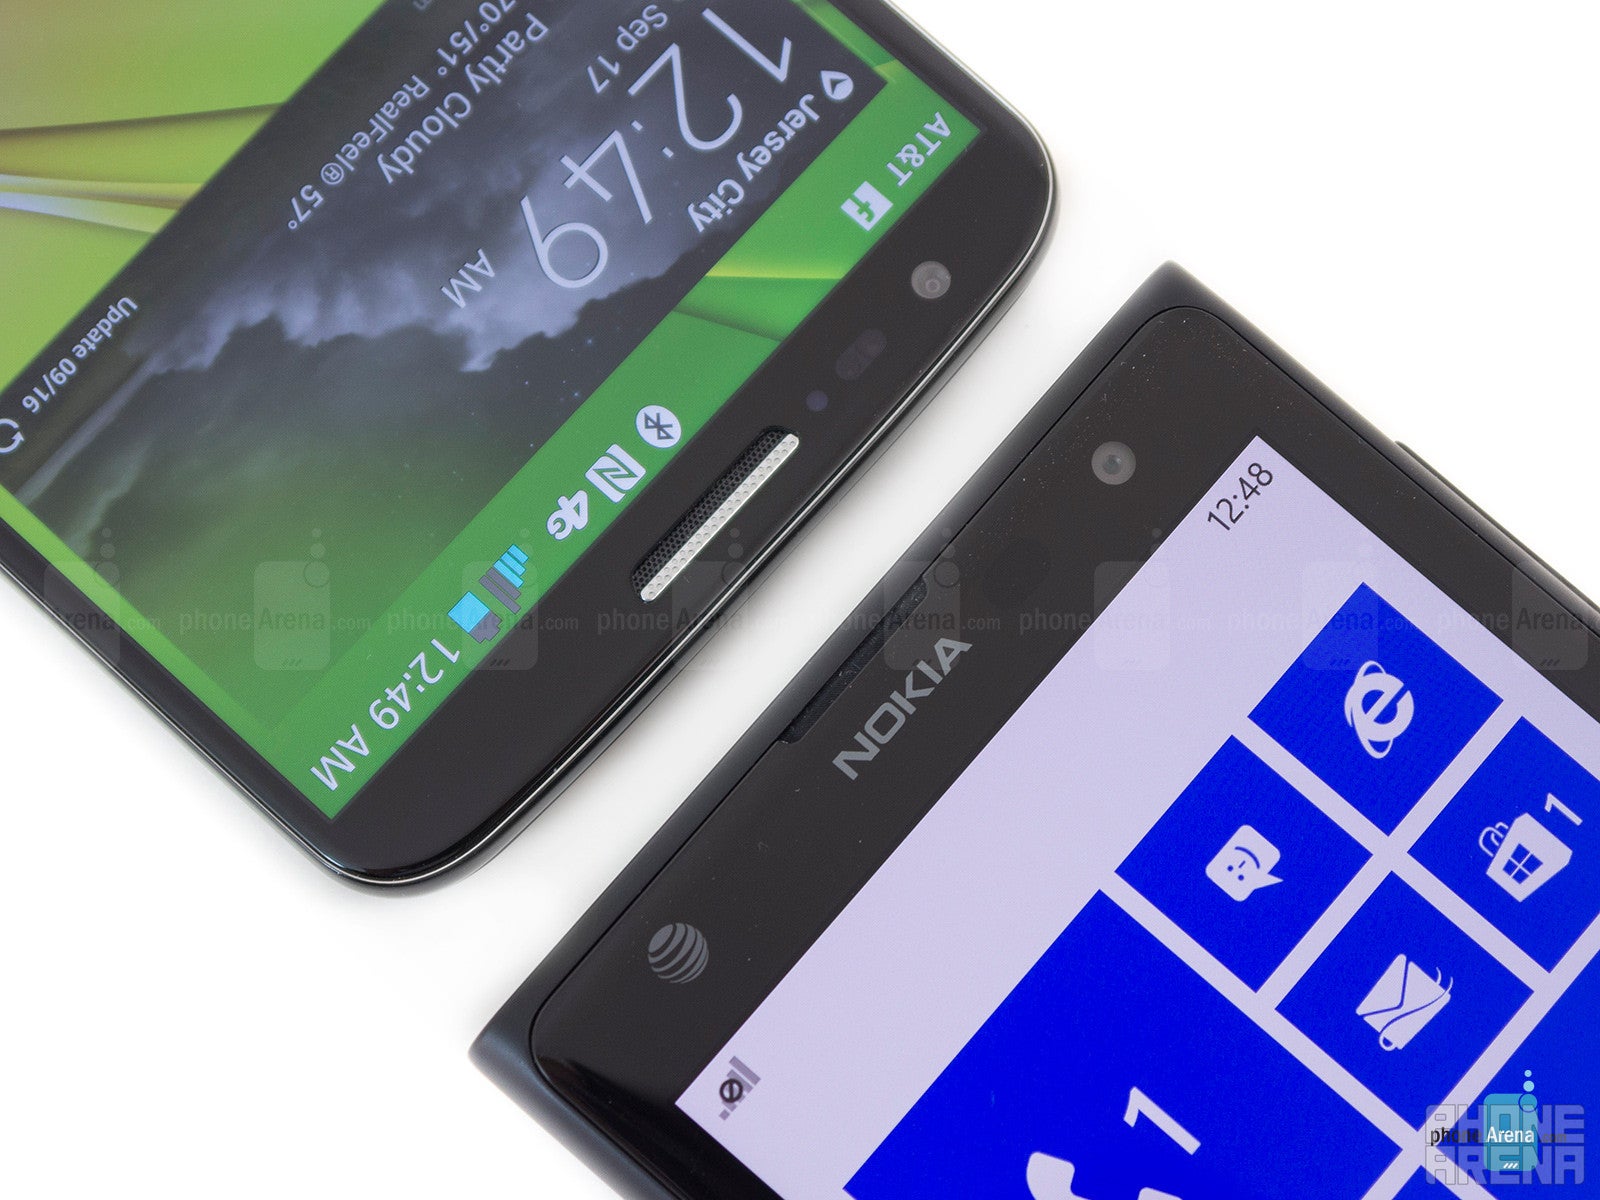 LG G2 vs Nokia Lumia 1020